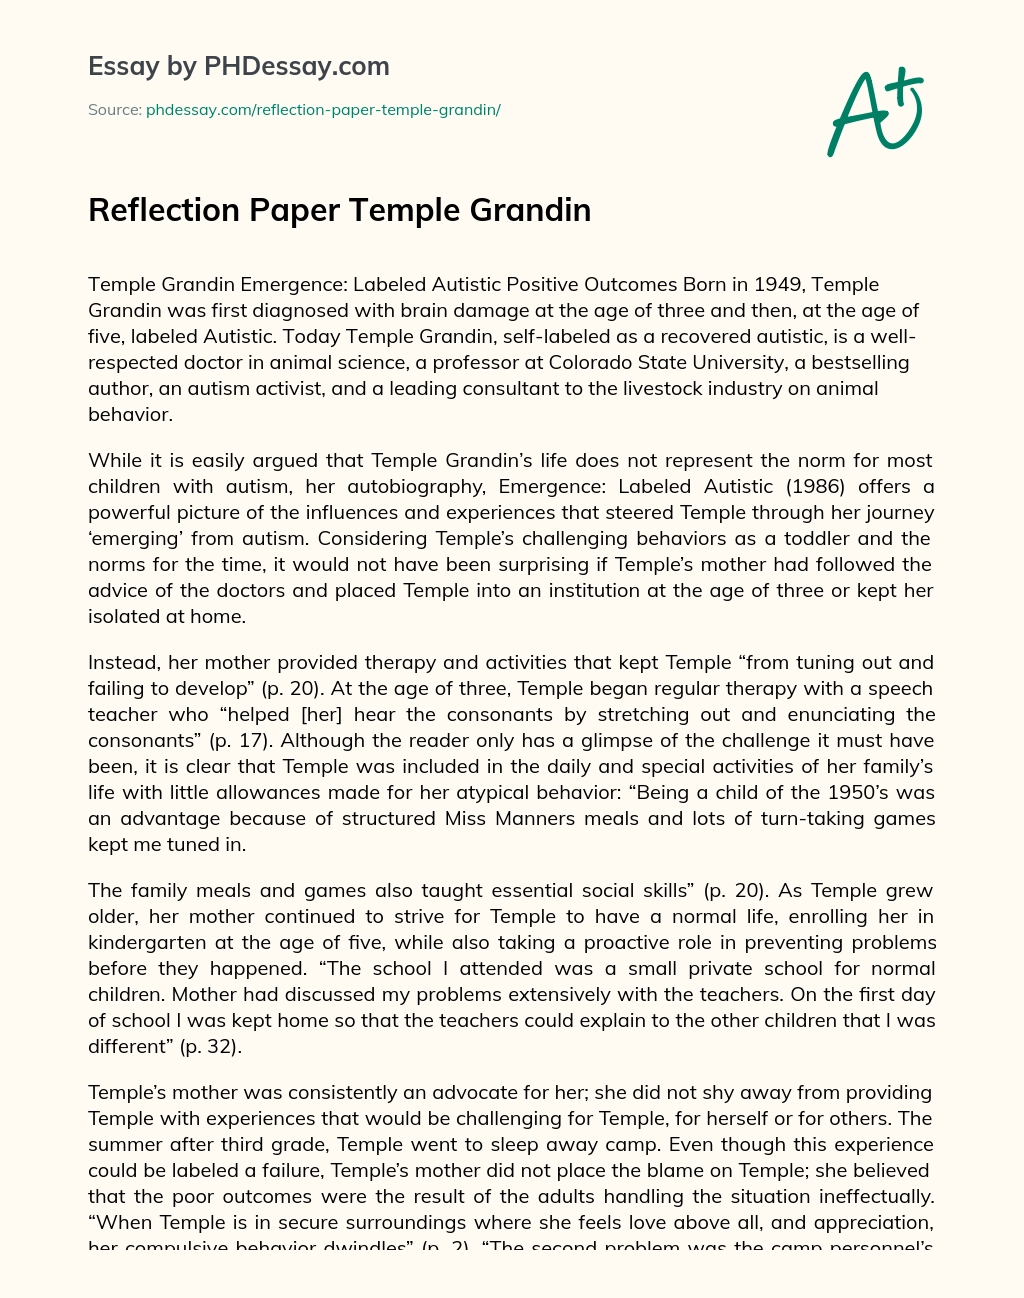 temple grandin movie summary